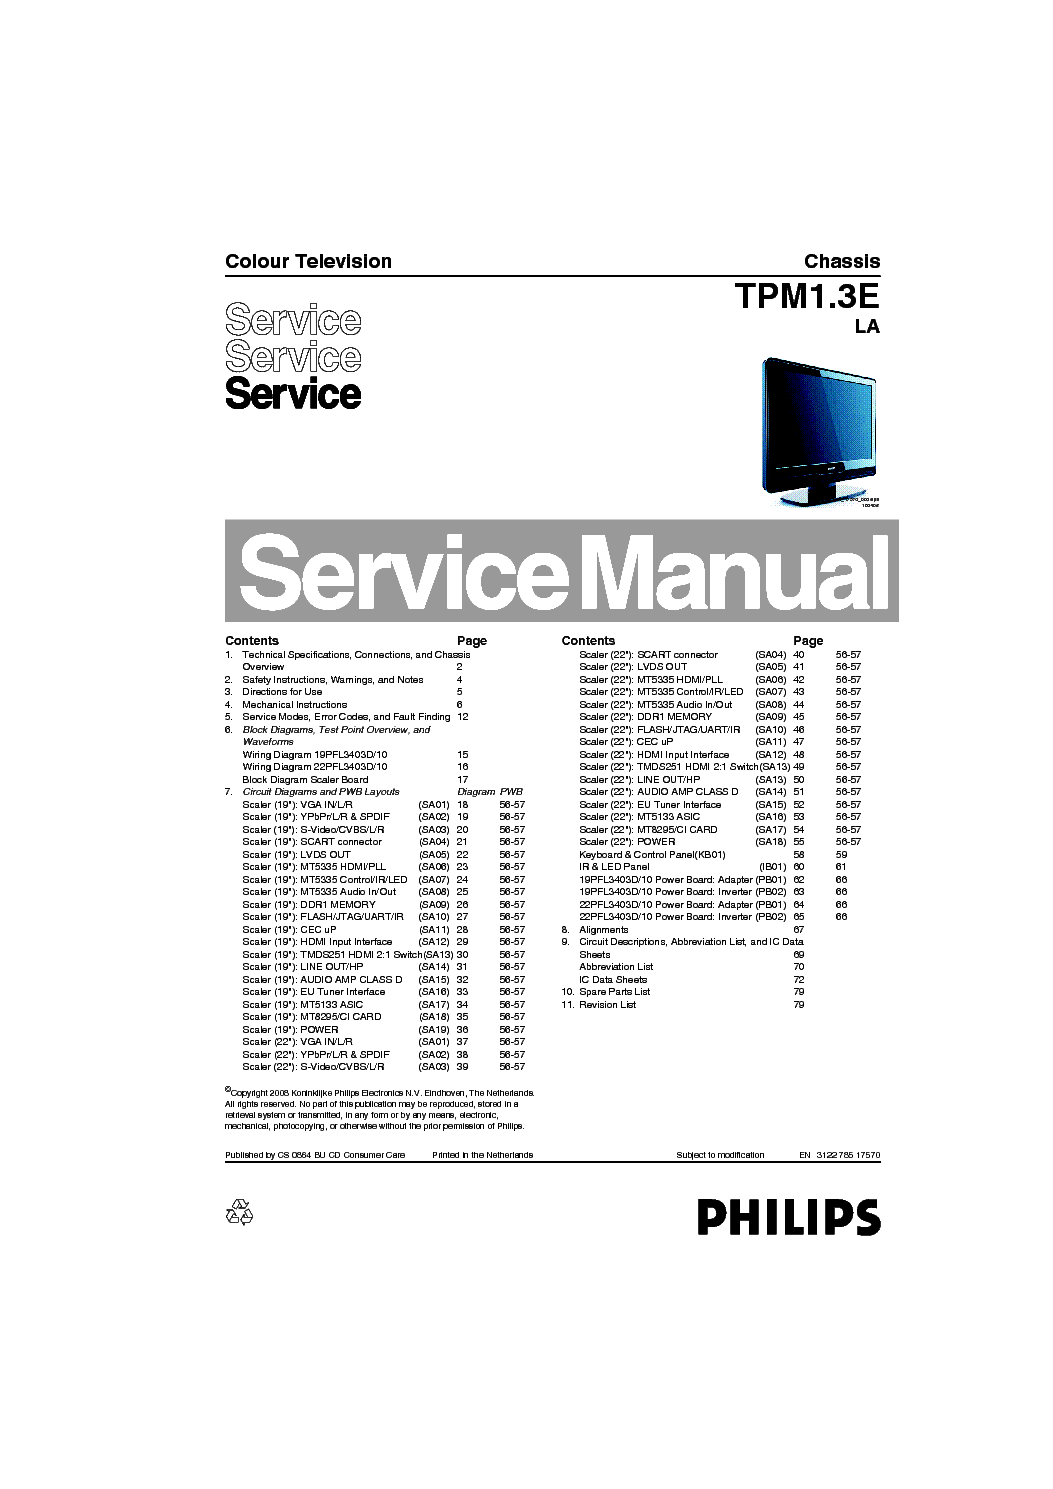 PHILIPS TPM1.3E LA CHASSIS SM service manual (1st page)